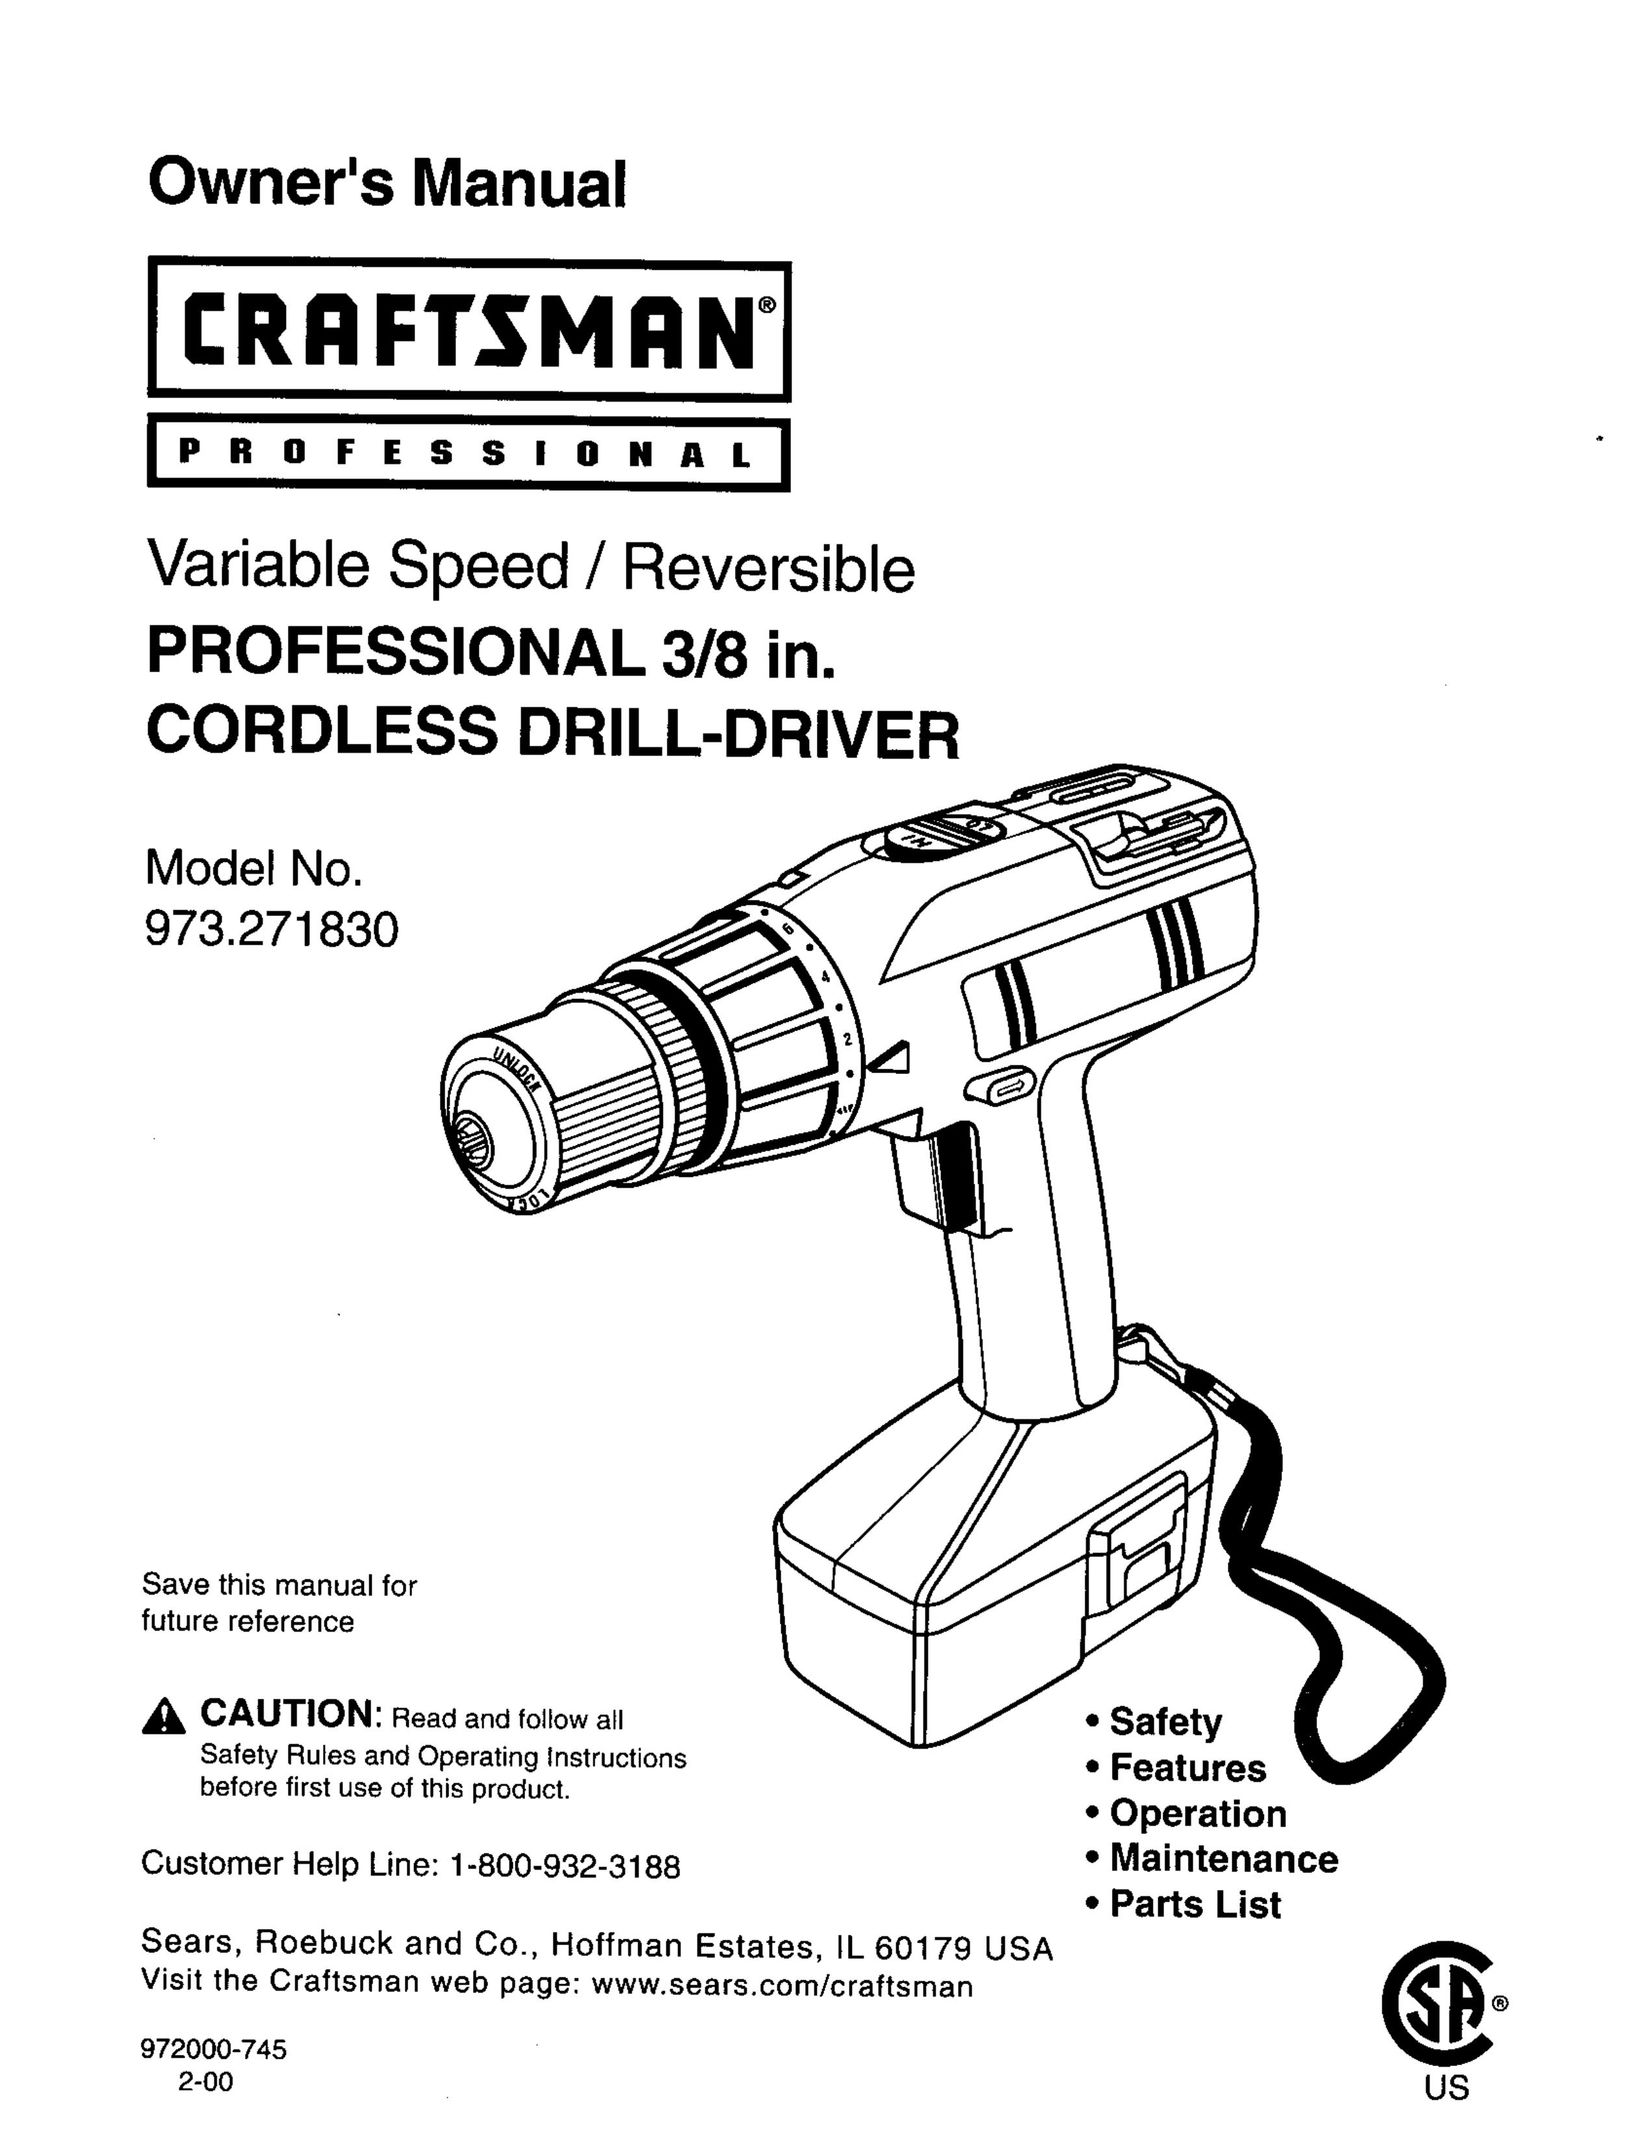 Craftsman 973.271830 Cordless Drill User Manual